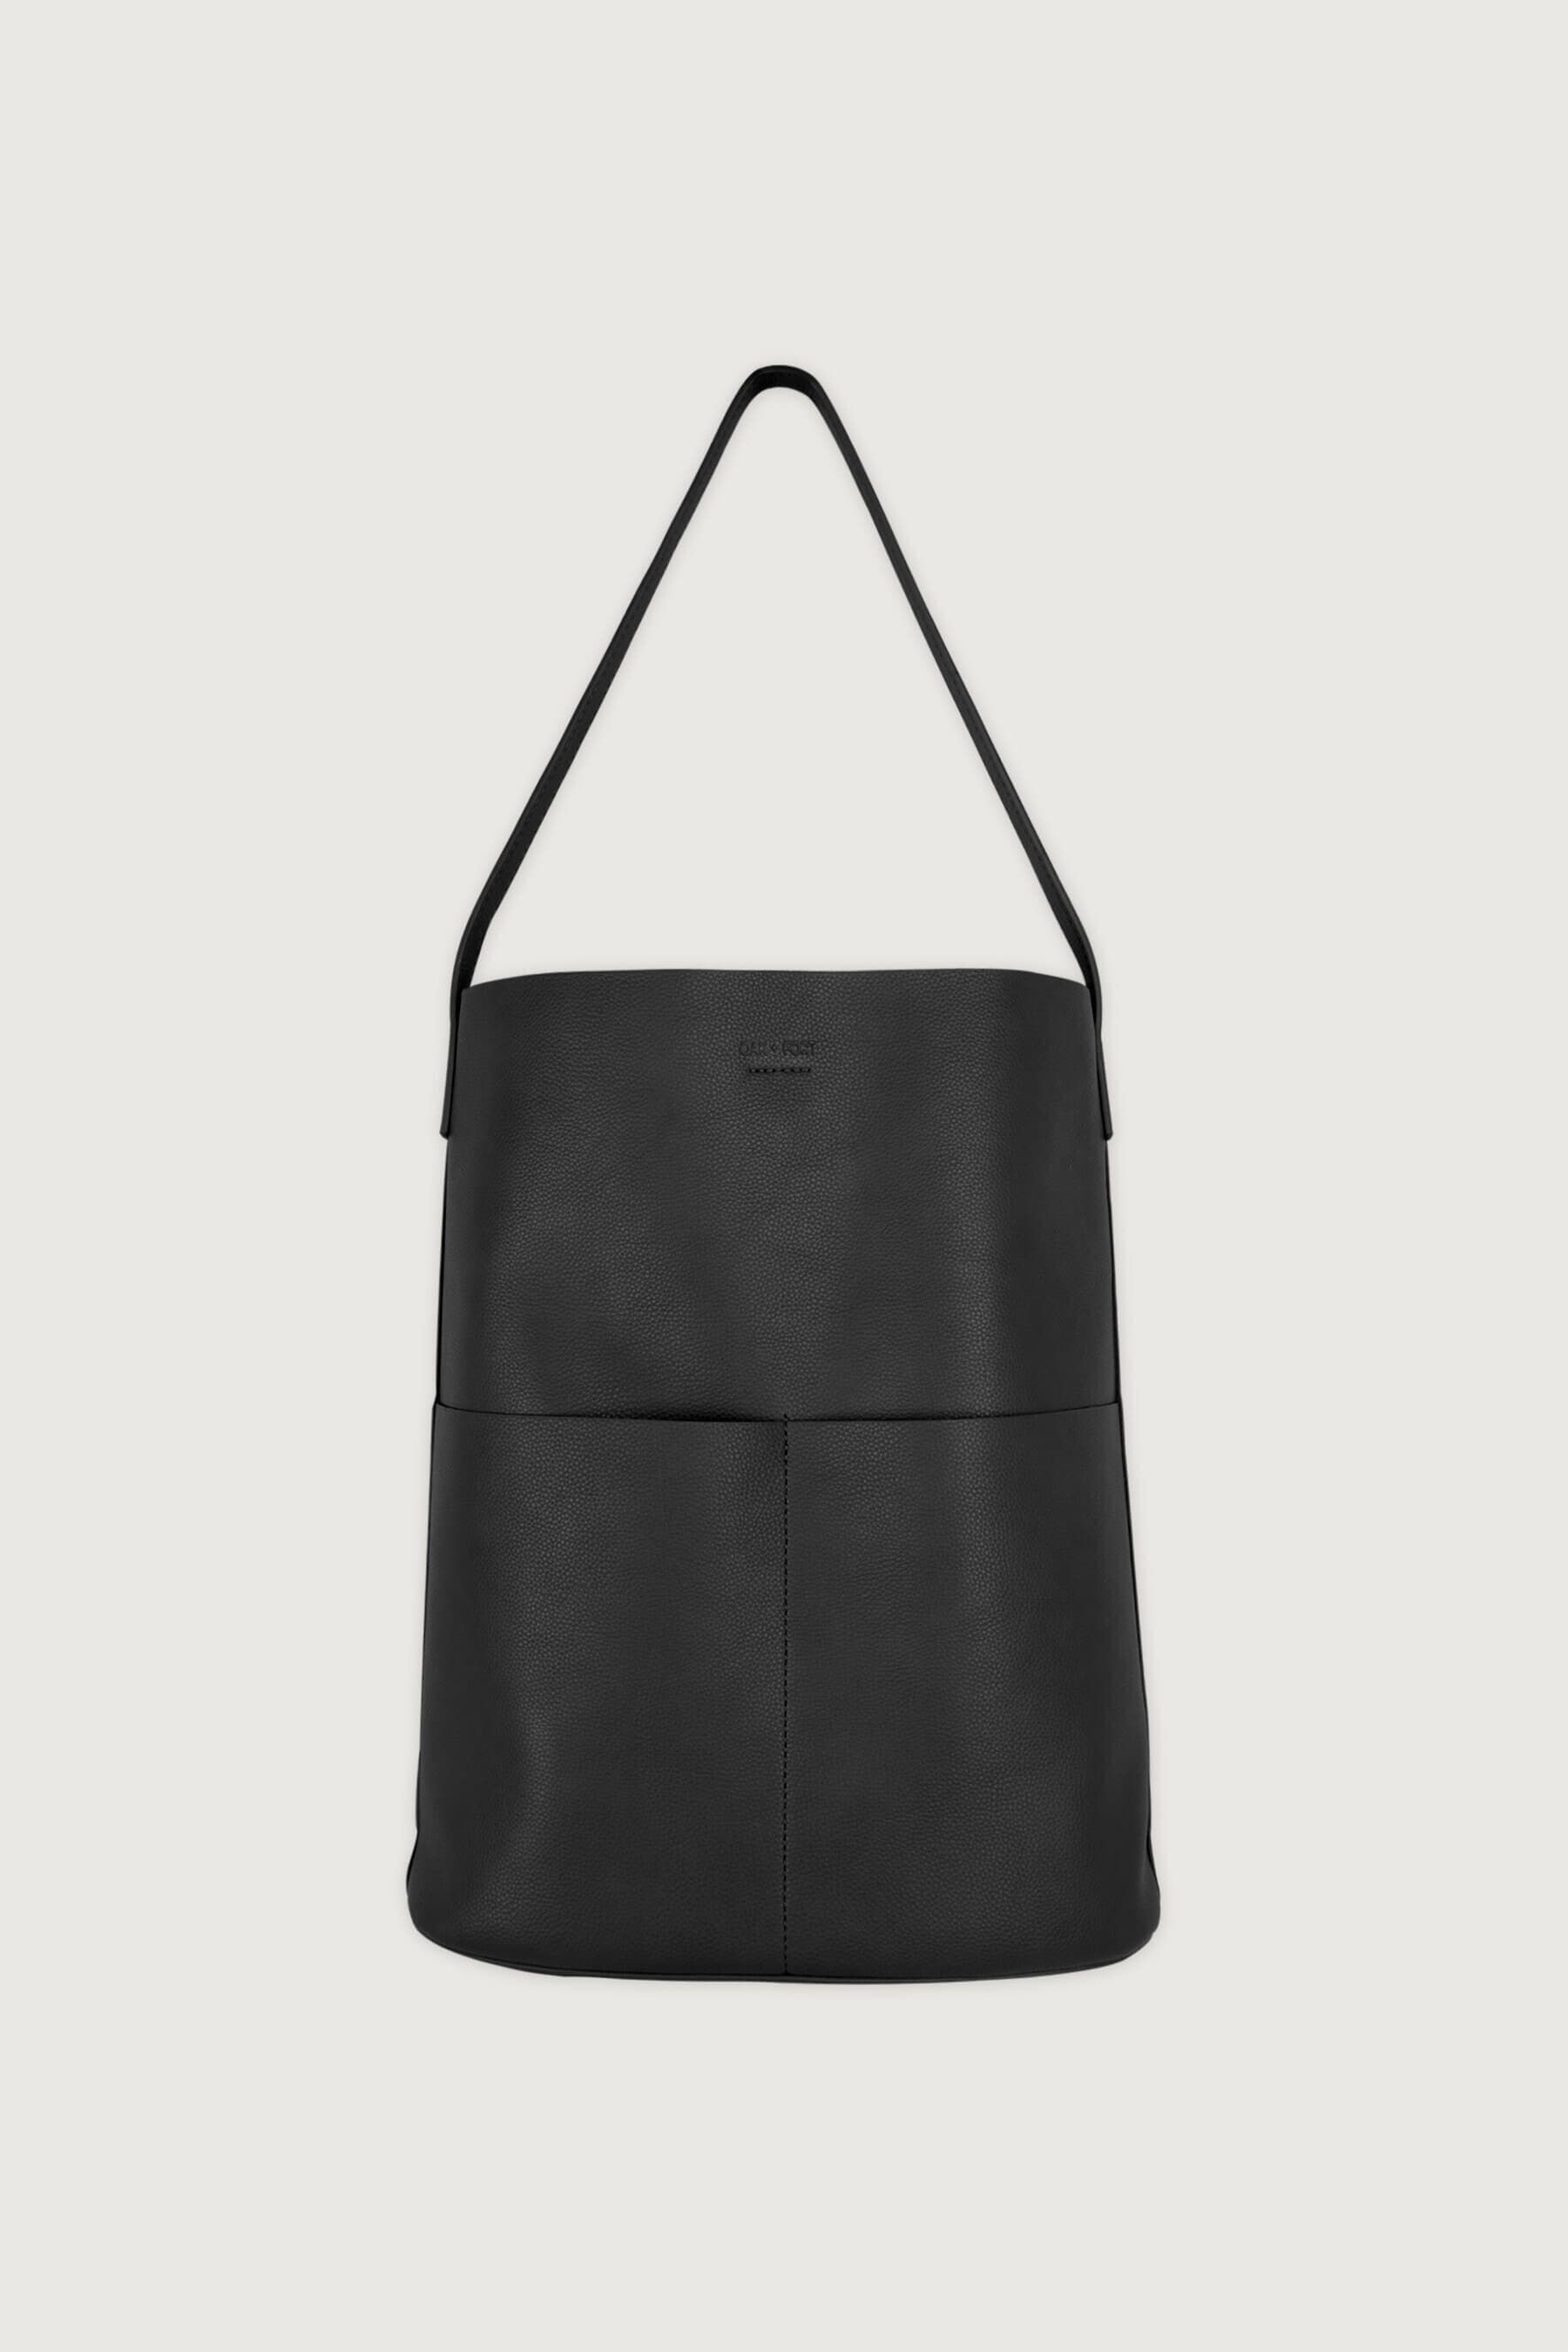 Women Handbags Shoulder Bags Large Tote Bags Lady Casual Bags School Shopping Trip Dating， ﻿ 